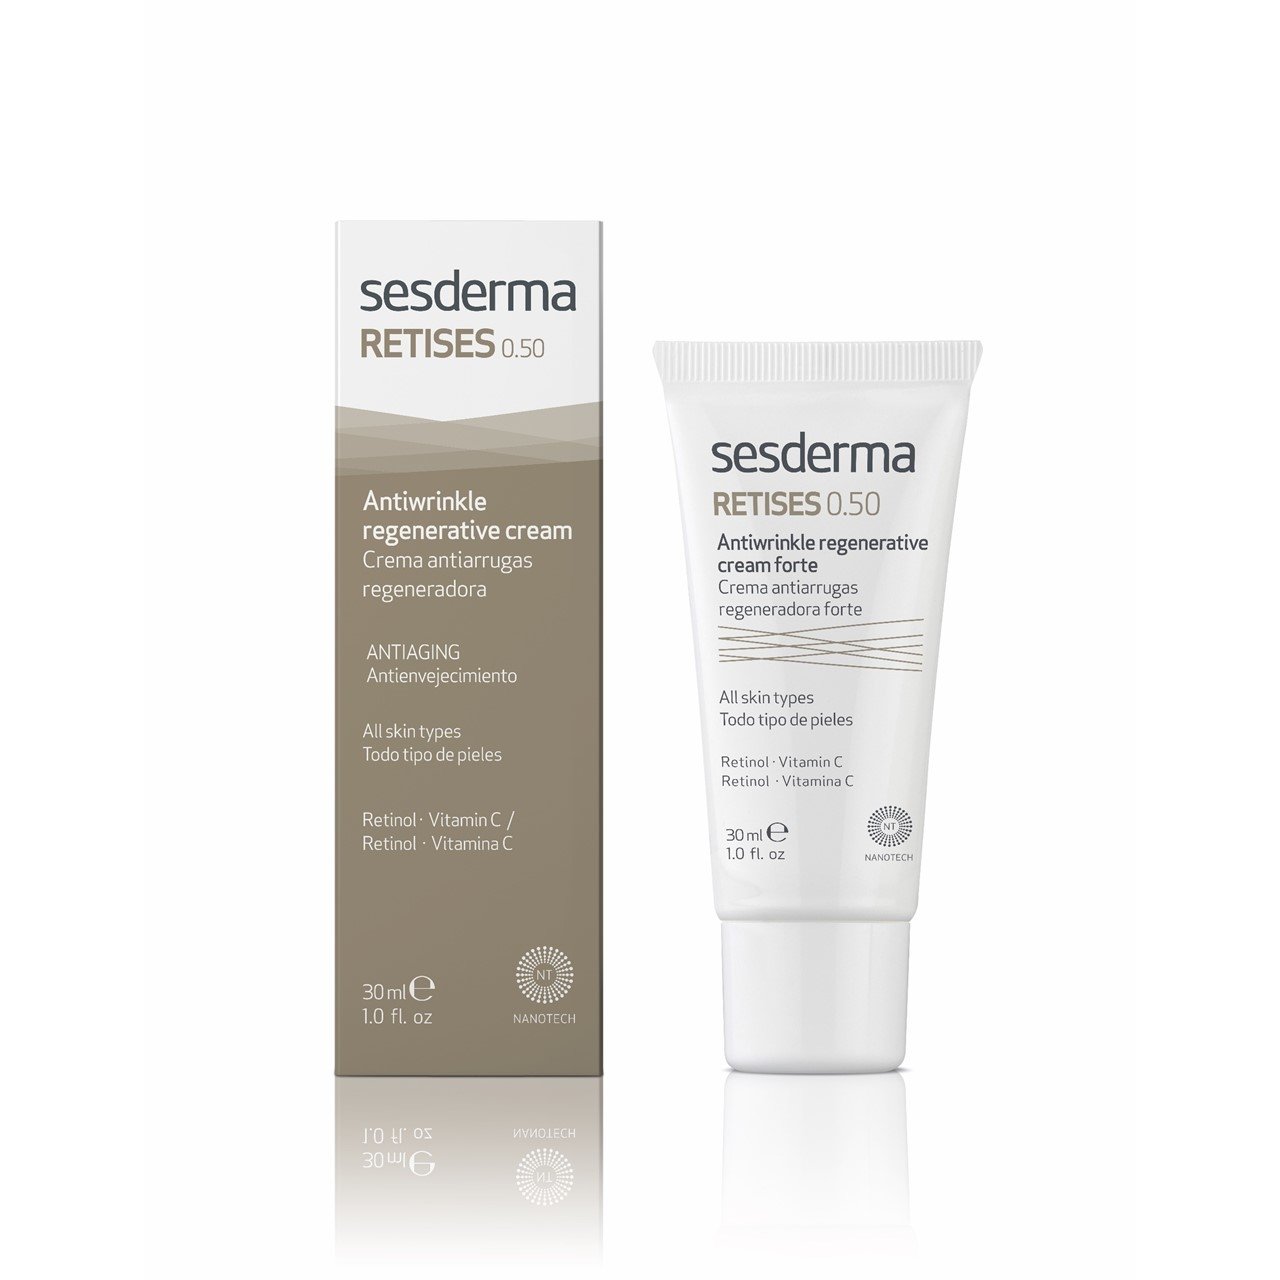 Sesderma Retises 0.5 Antiwrinkle Regenerative Cream 30ml (1.01fl oz)